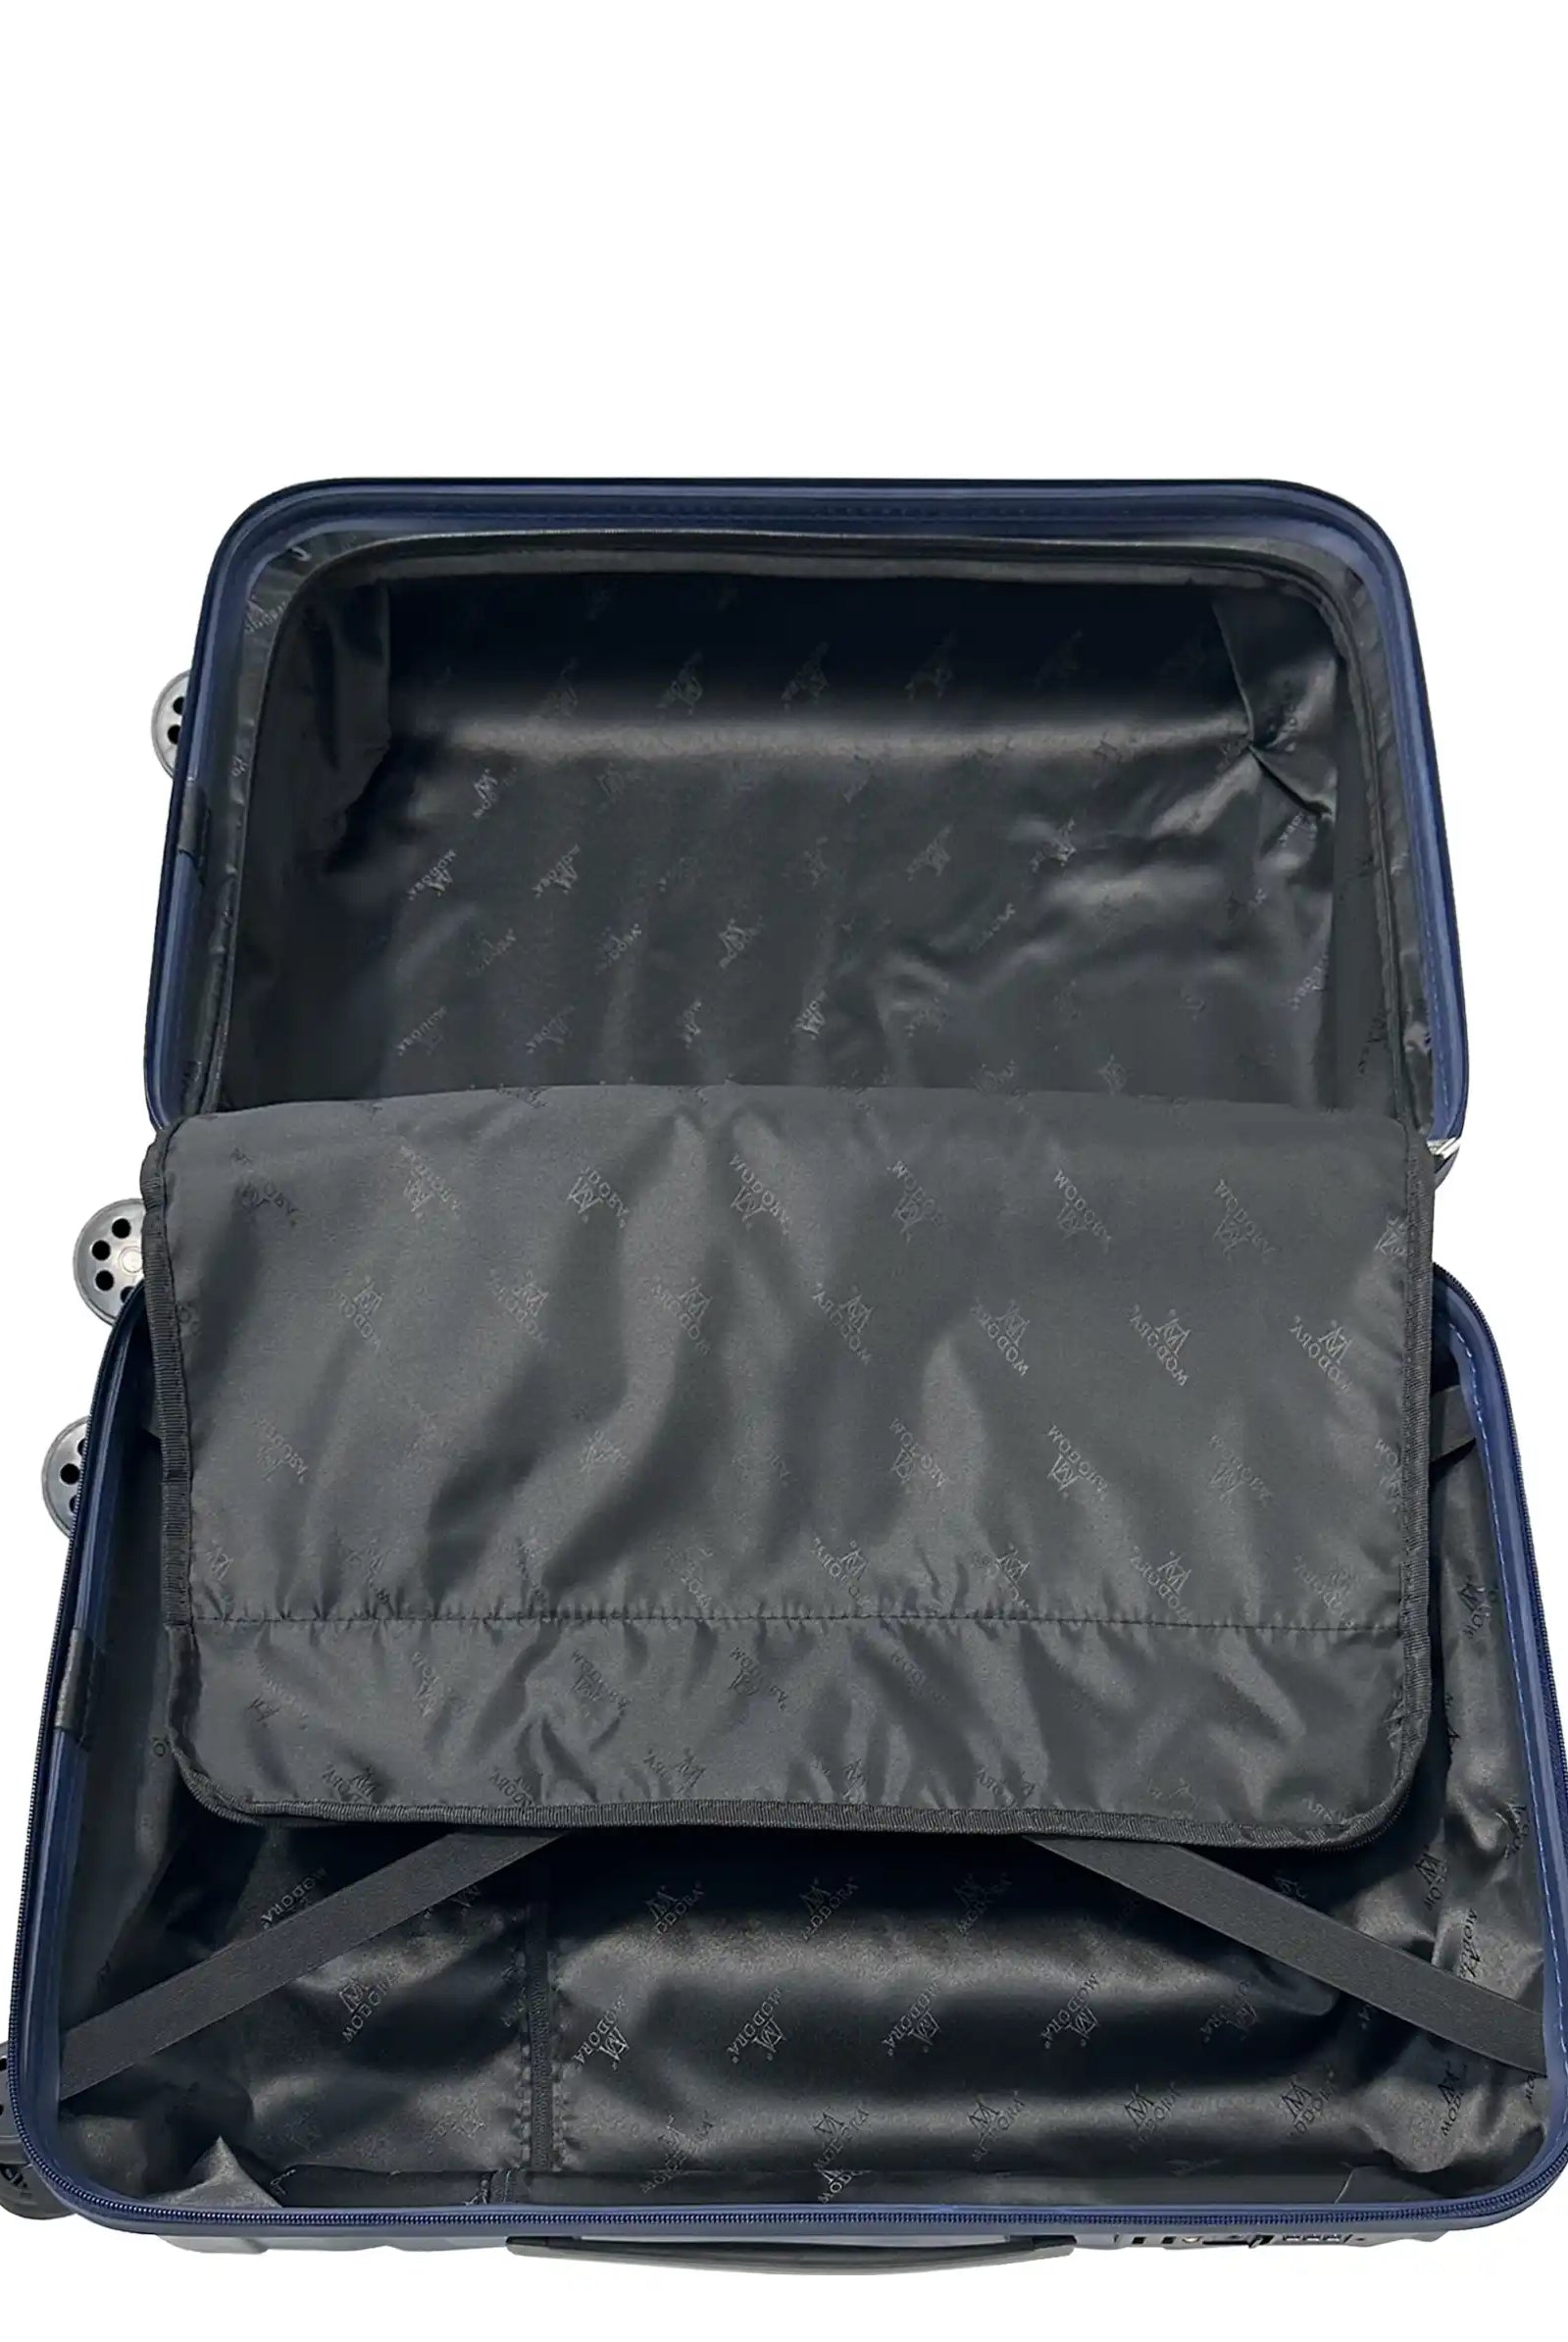 Vague navy medium suitcase